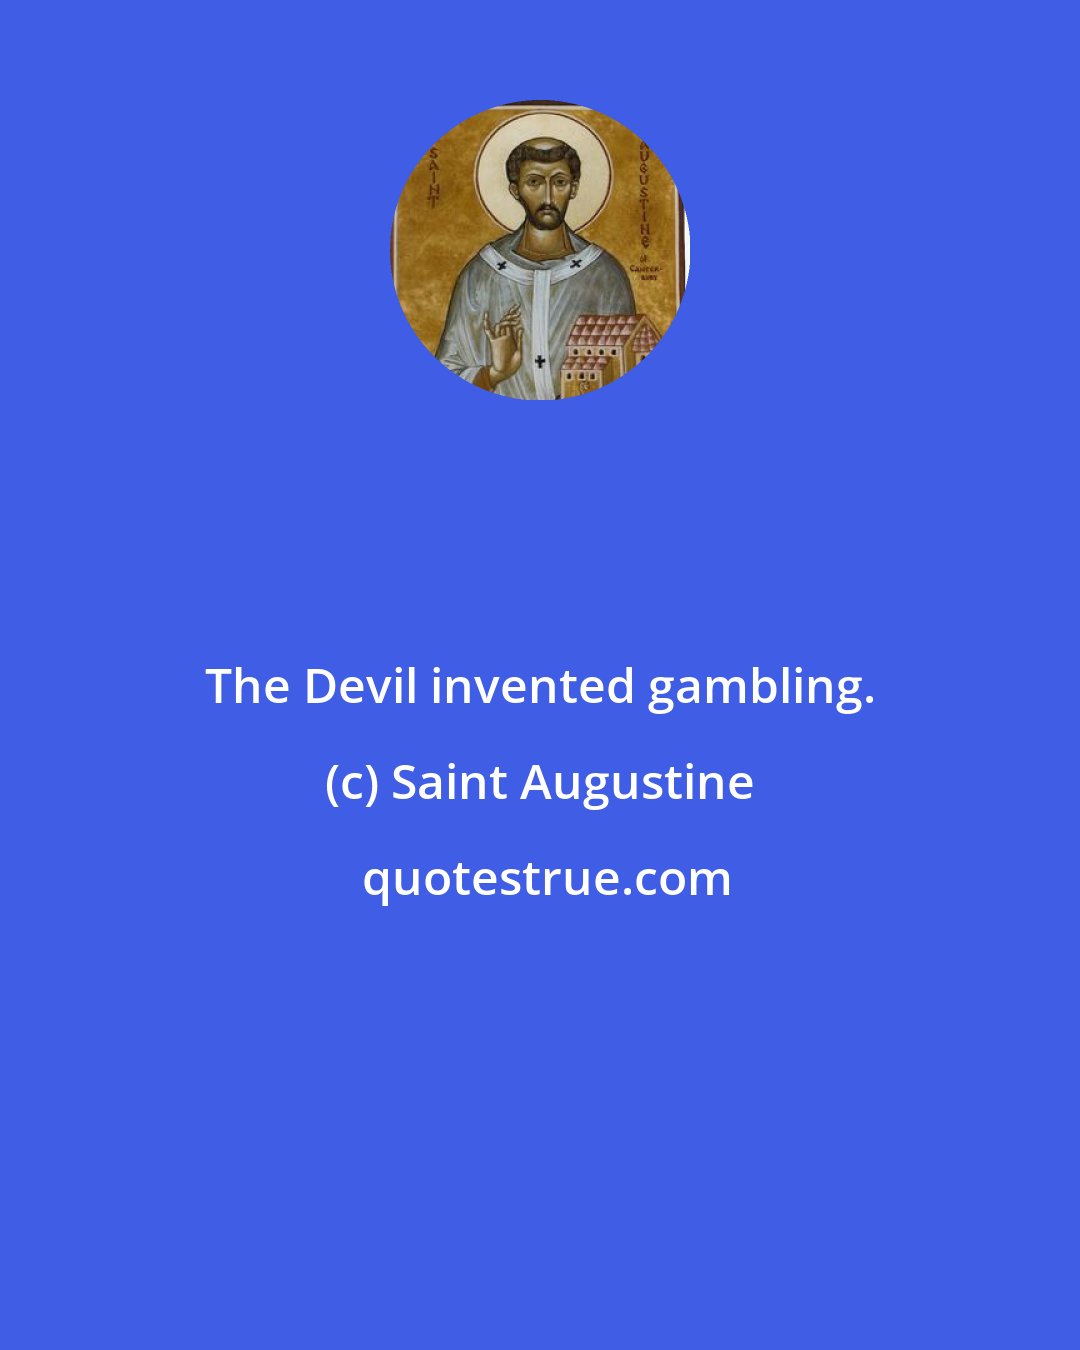 Saint Augustine: The Devil invented gambling.